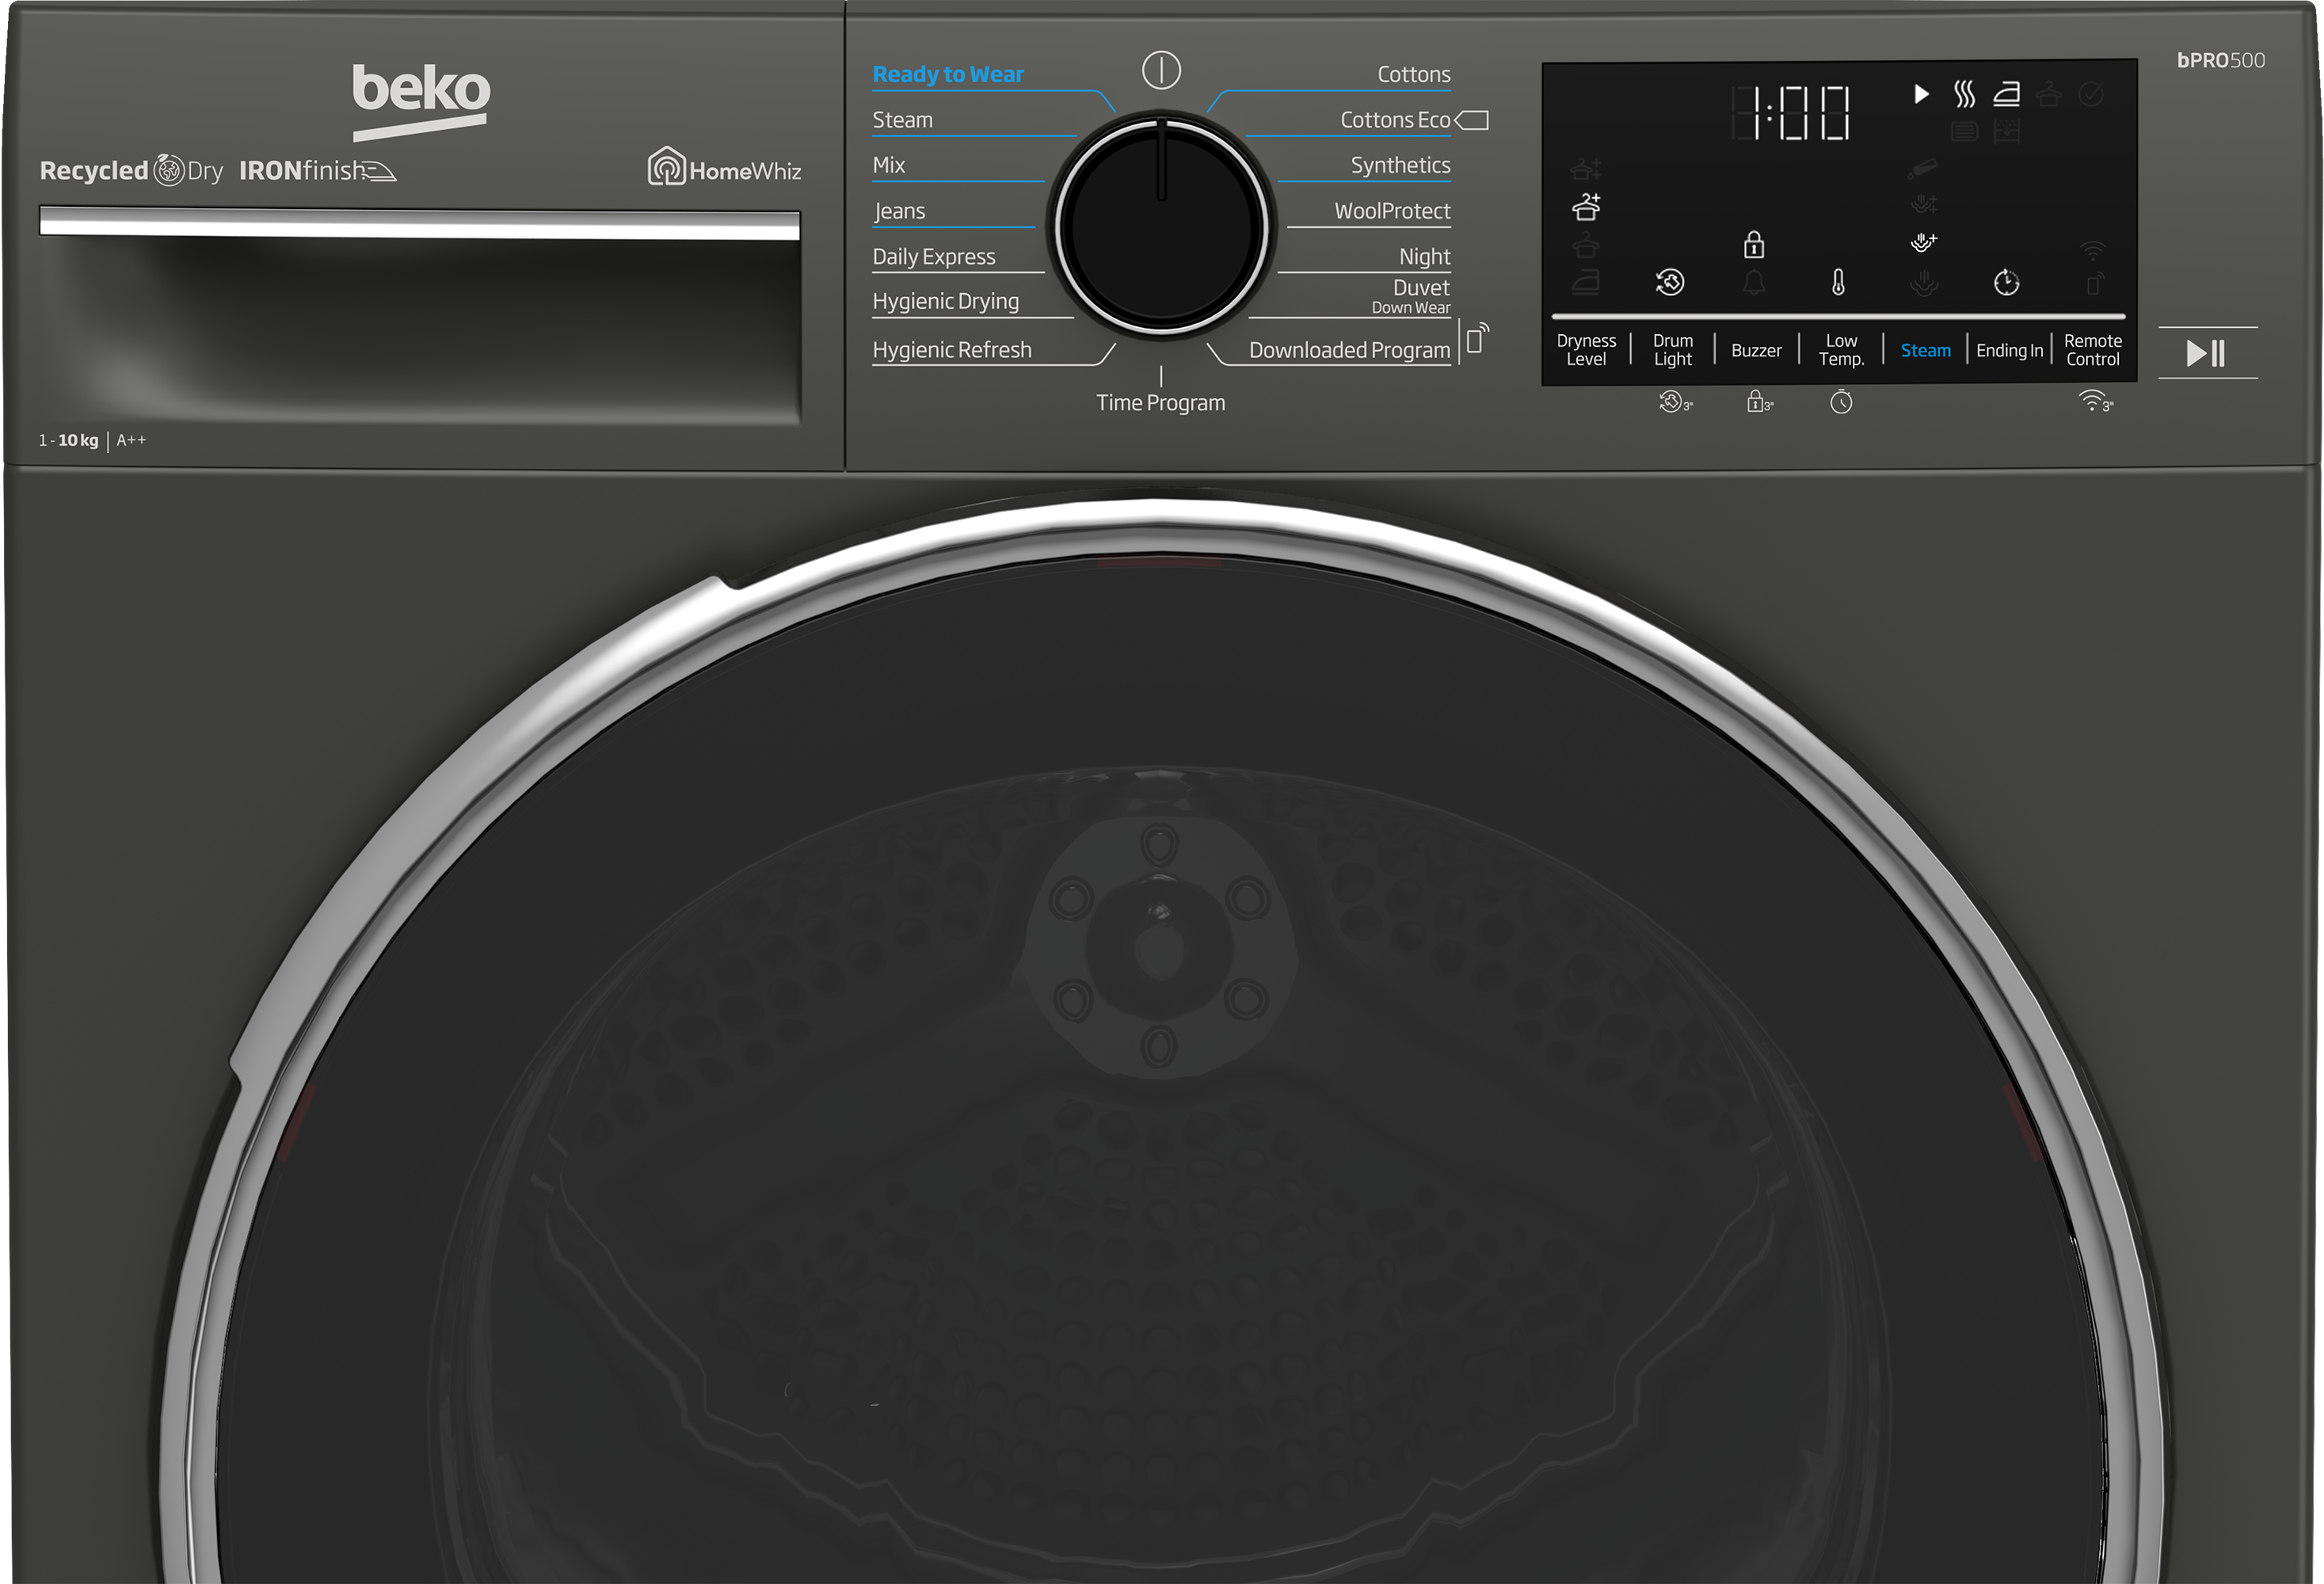 Beko 10kg Heat Pump Tumble Dryer Manhattan Grey B5T44133W